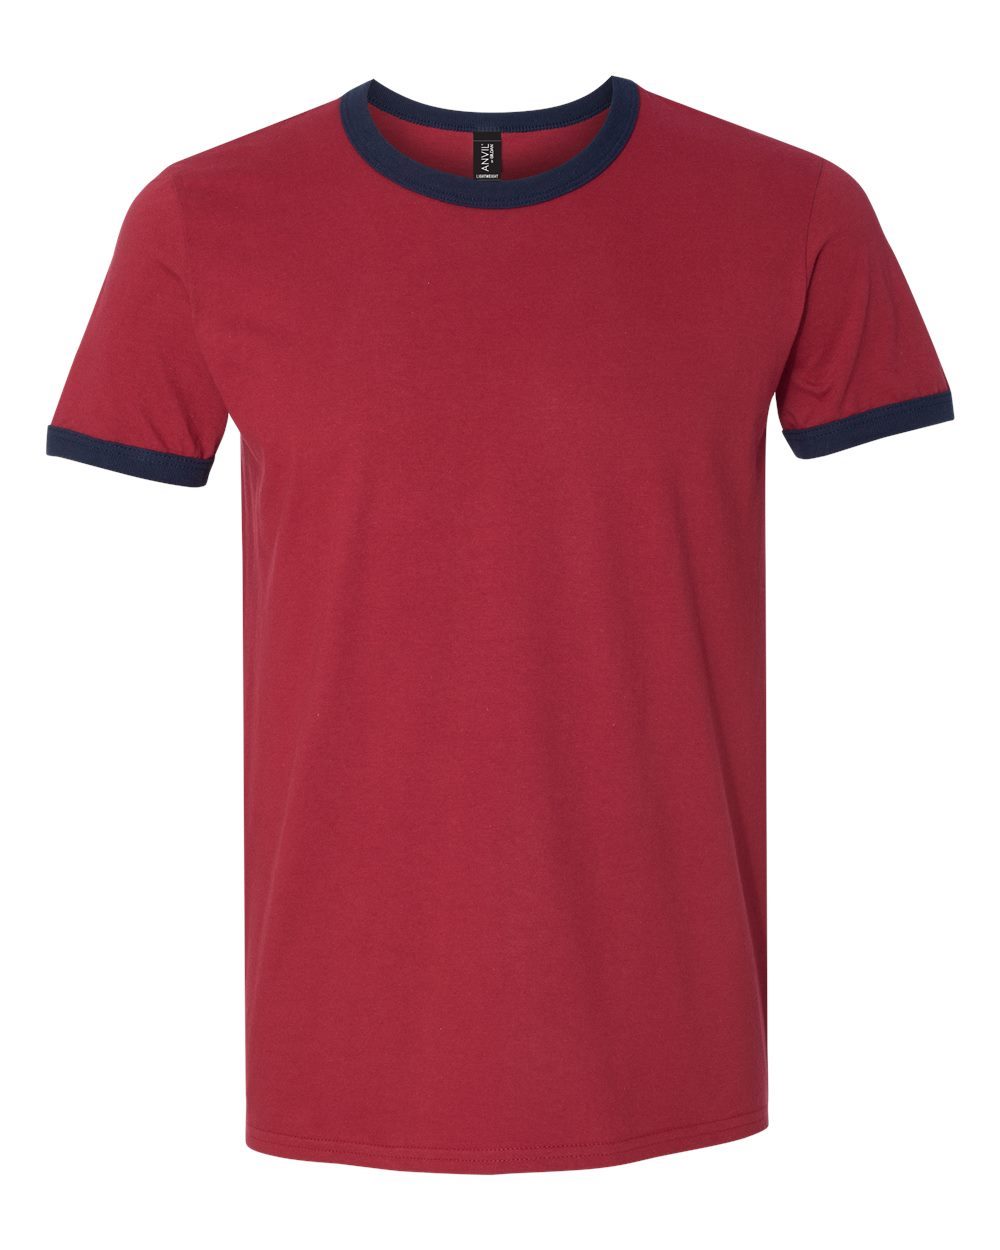 Mens Anvil Adult Lightweight Short Sleeve 100/% Cotton Ringer T Shirt Top